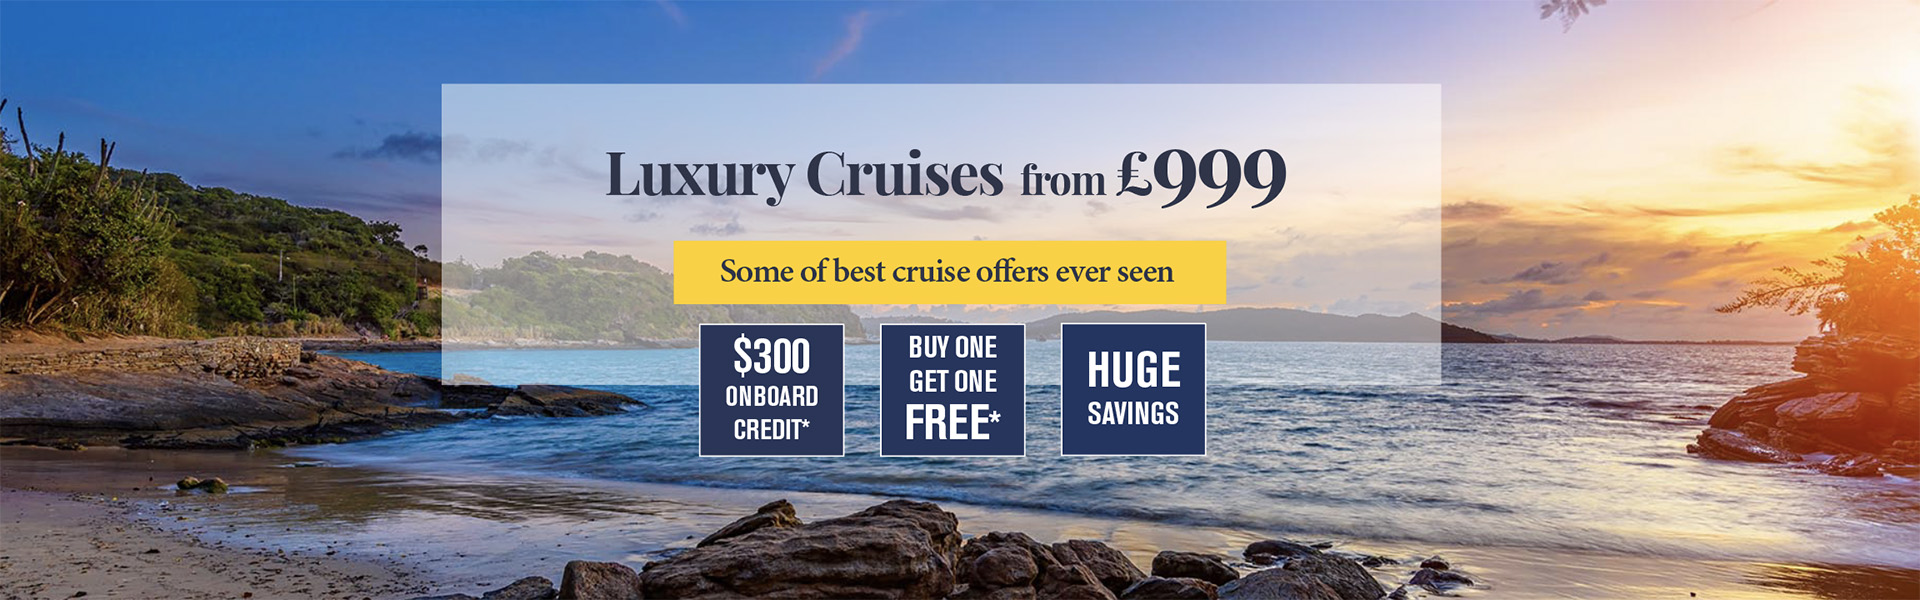 Luxury cruises from £999